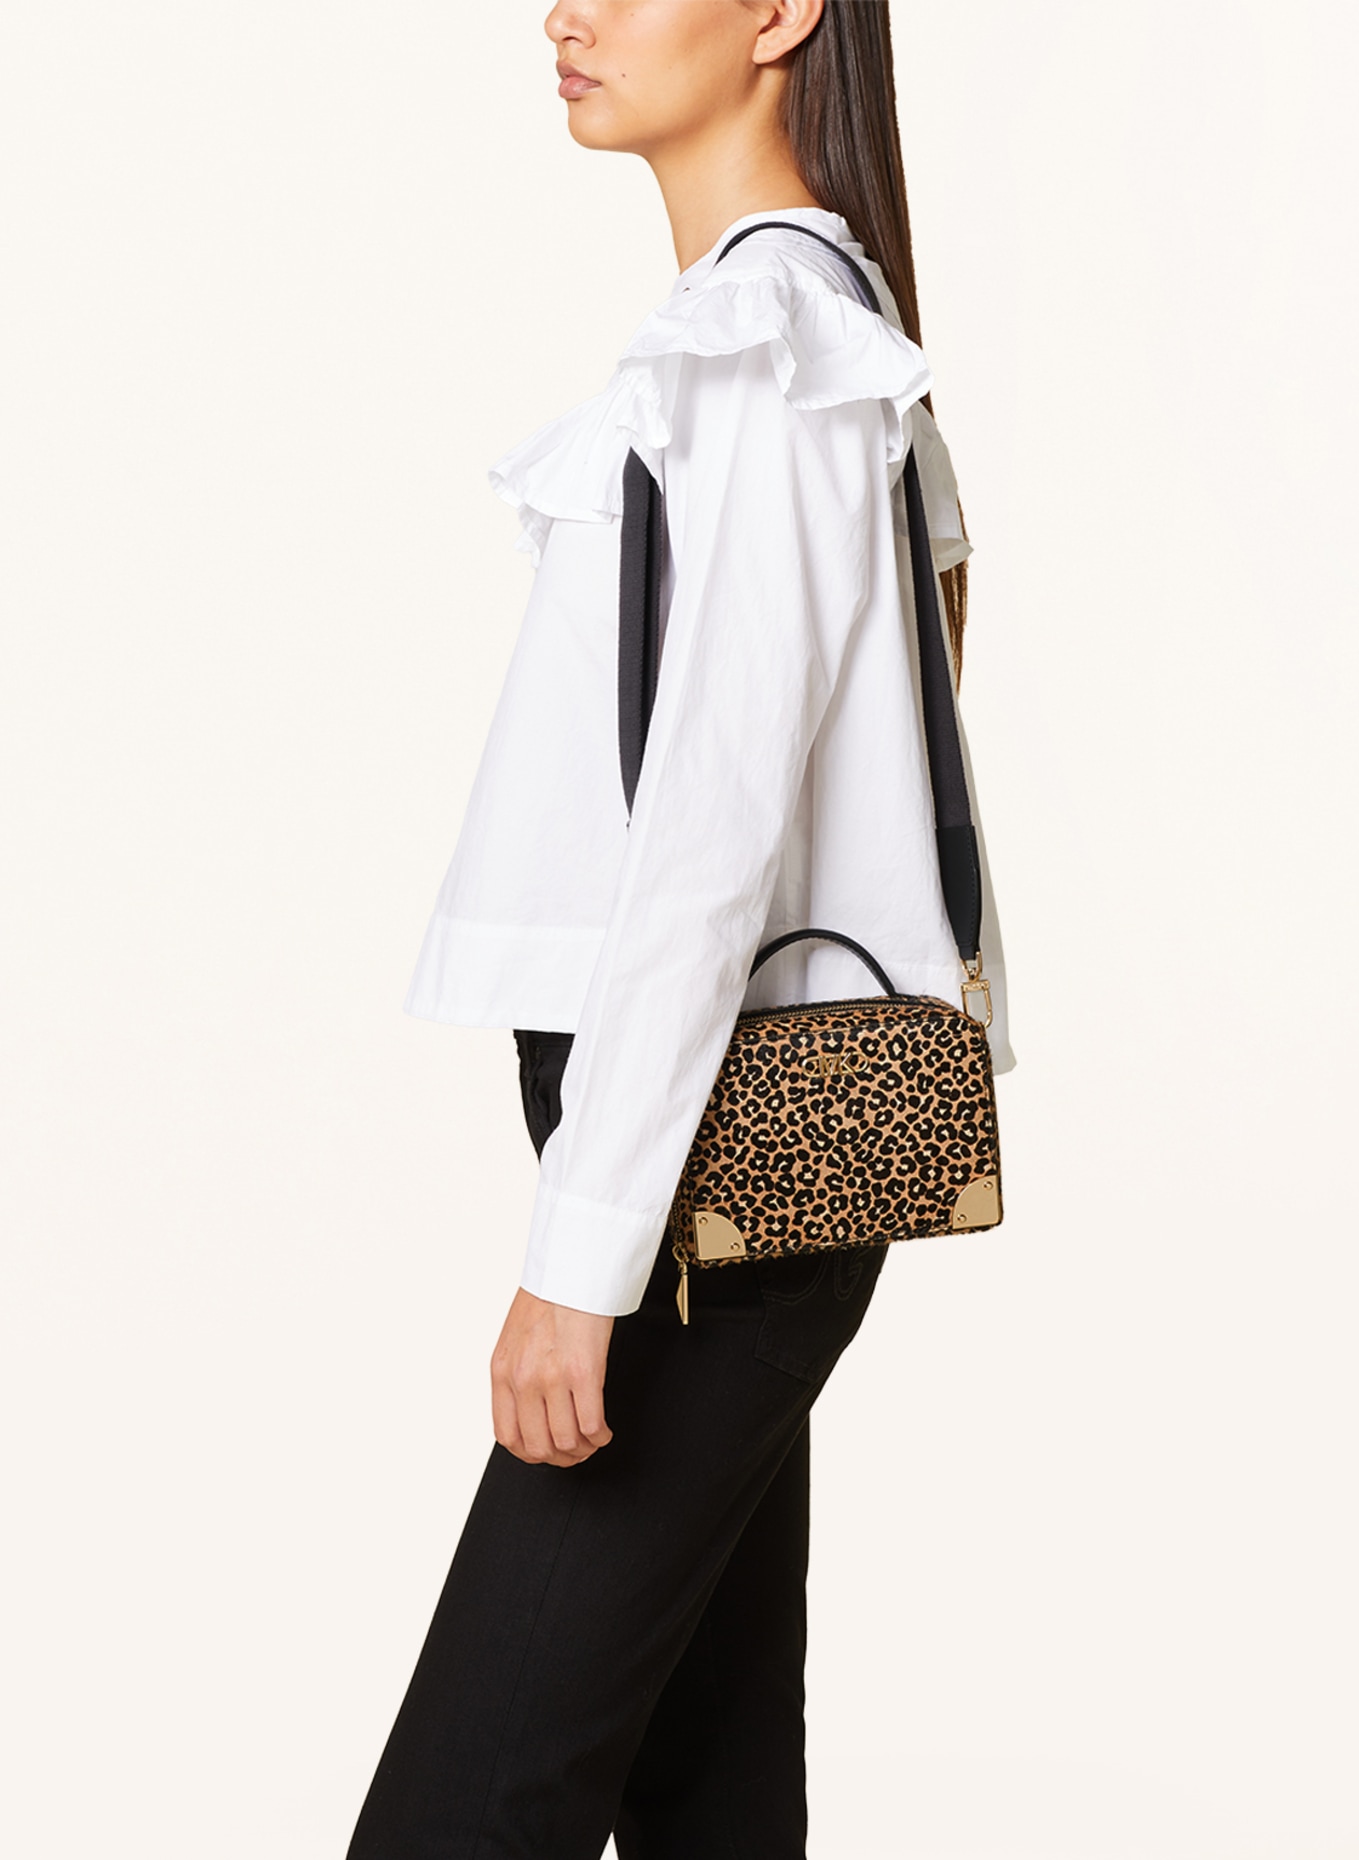 MICHAEL Michael Kors Ginny Leopard Print Cross-body Bag